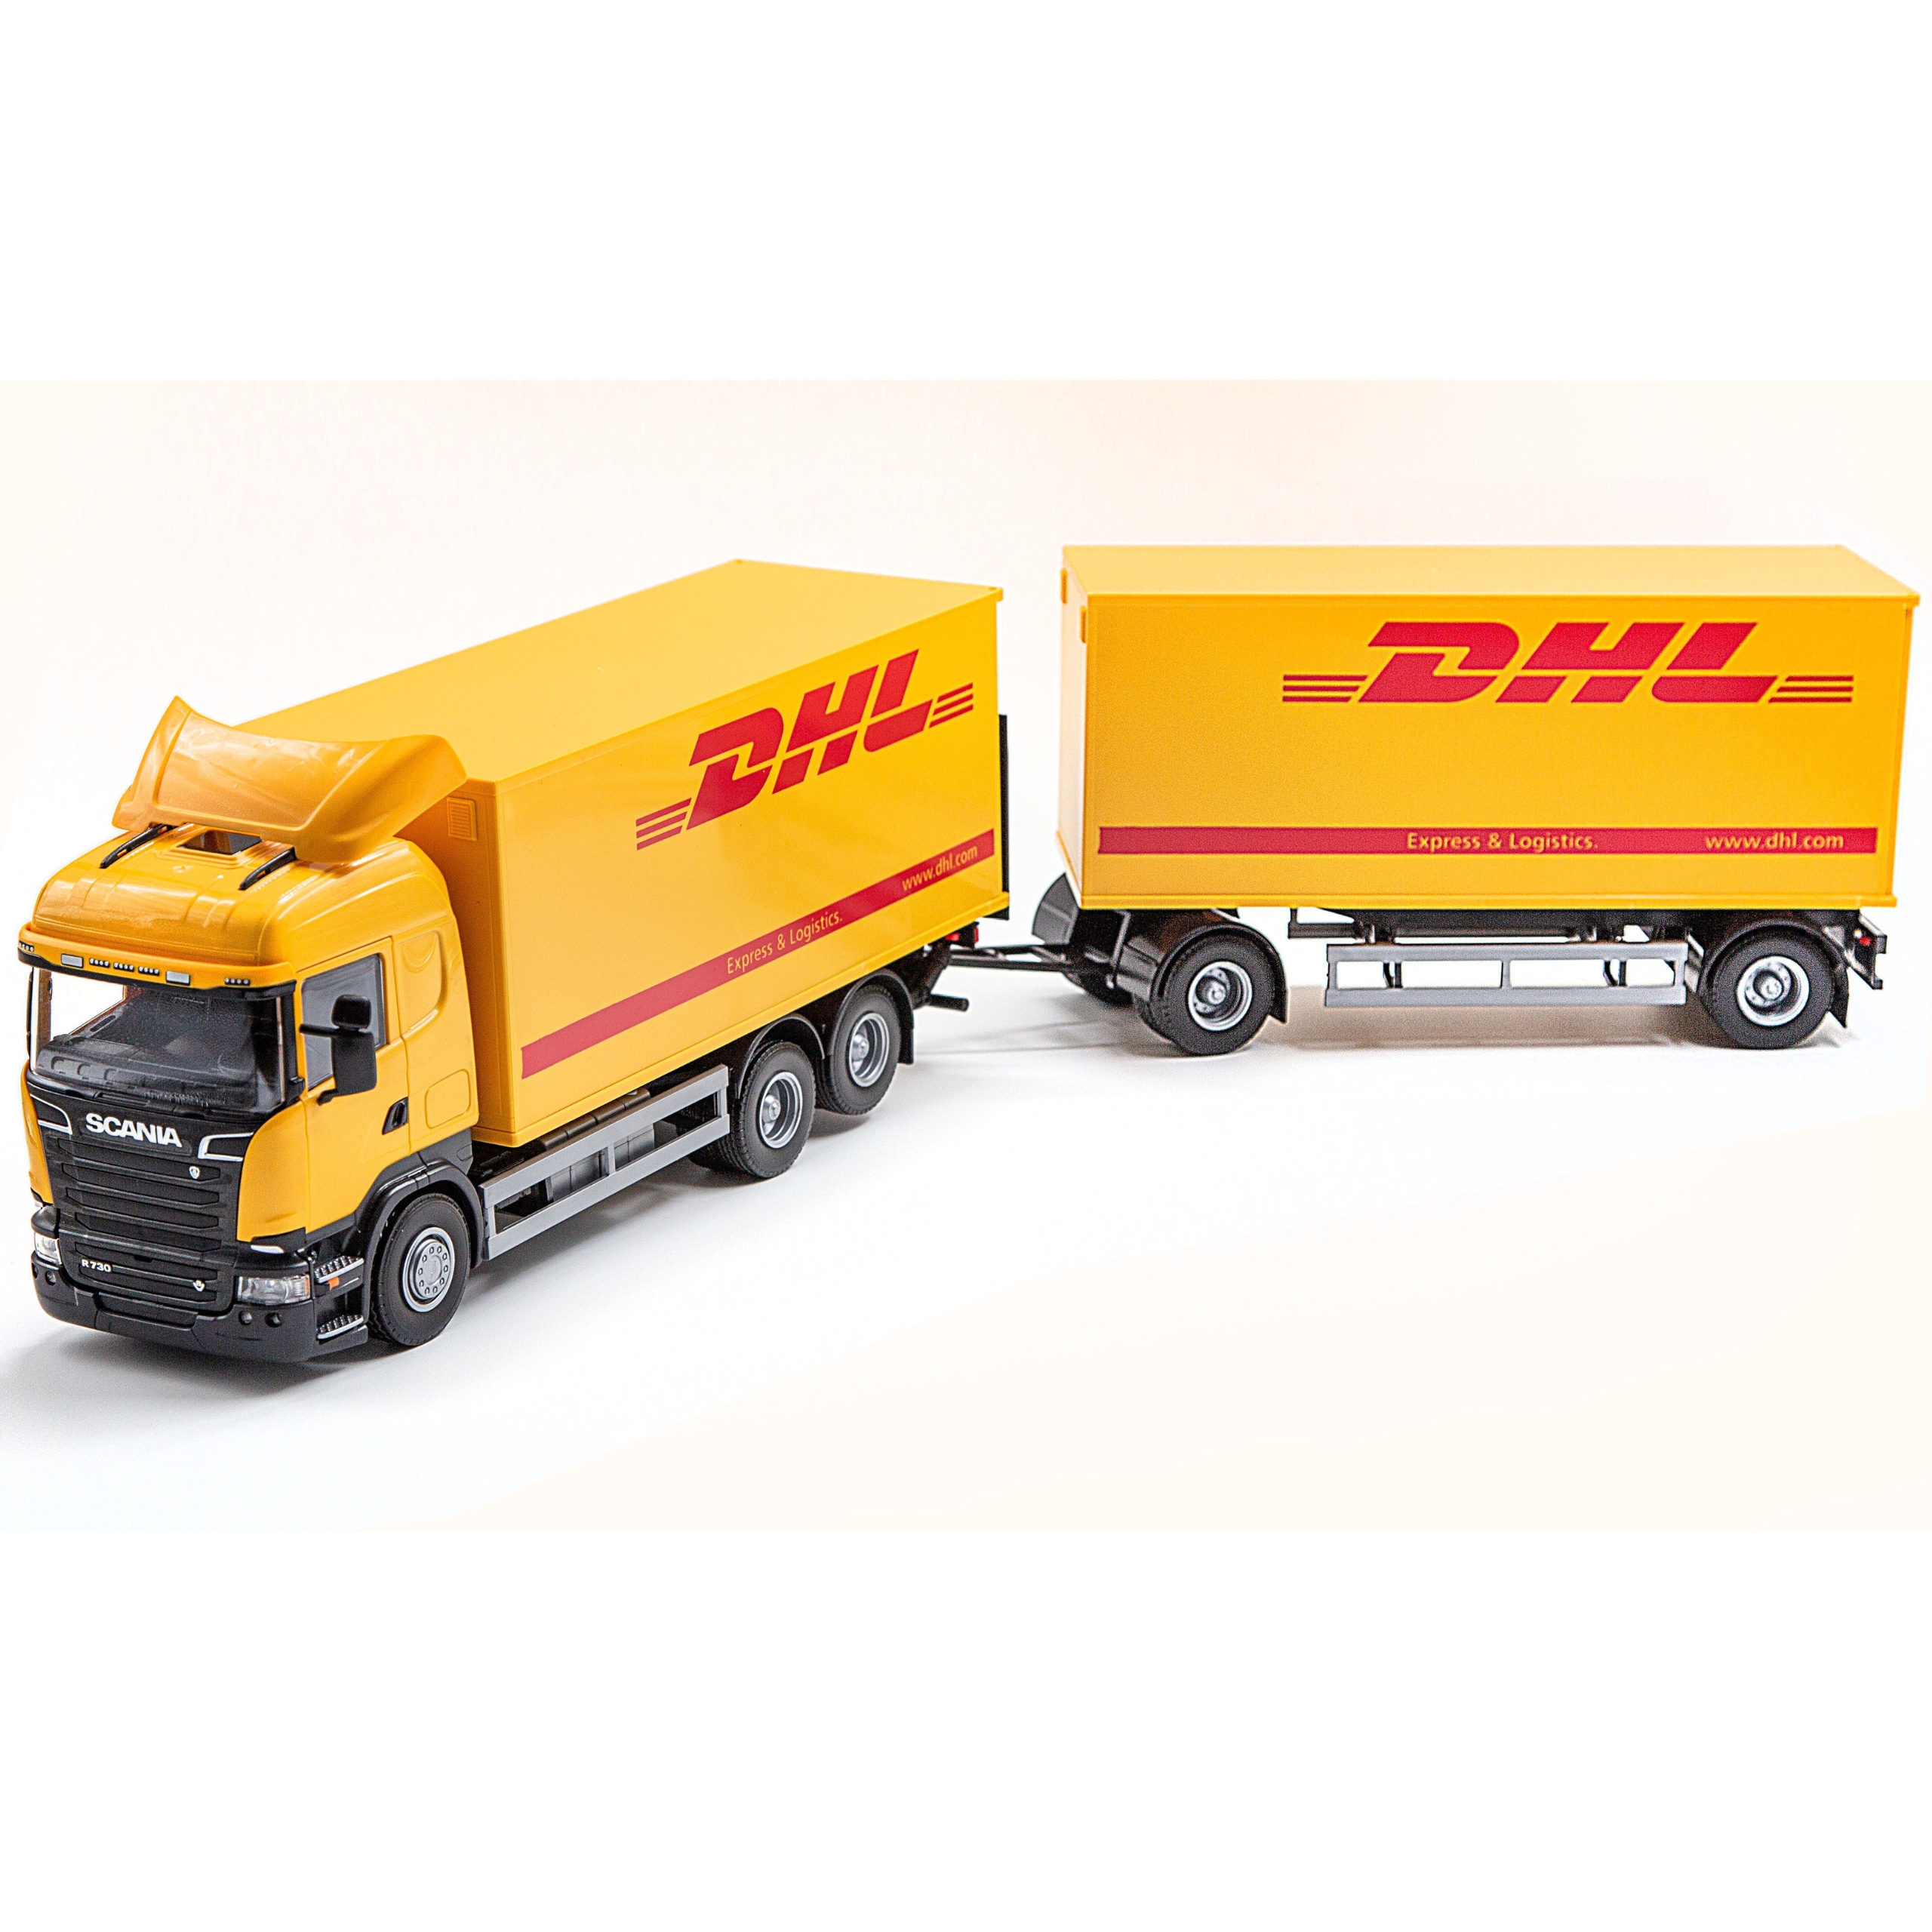 Emek emek legetøjsbil distrib. lastbil og trailer